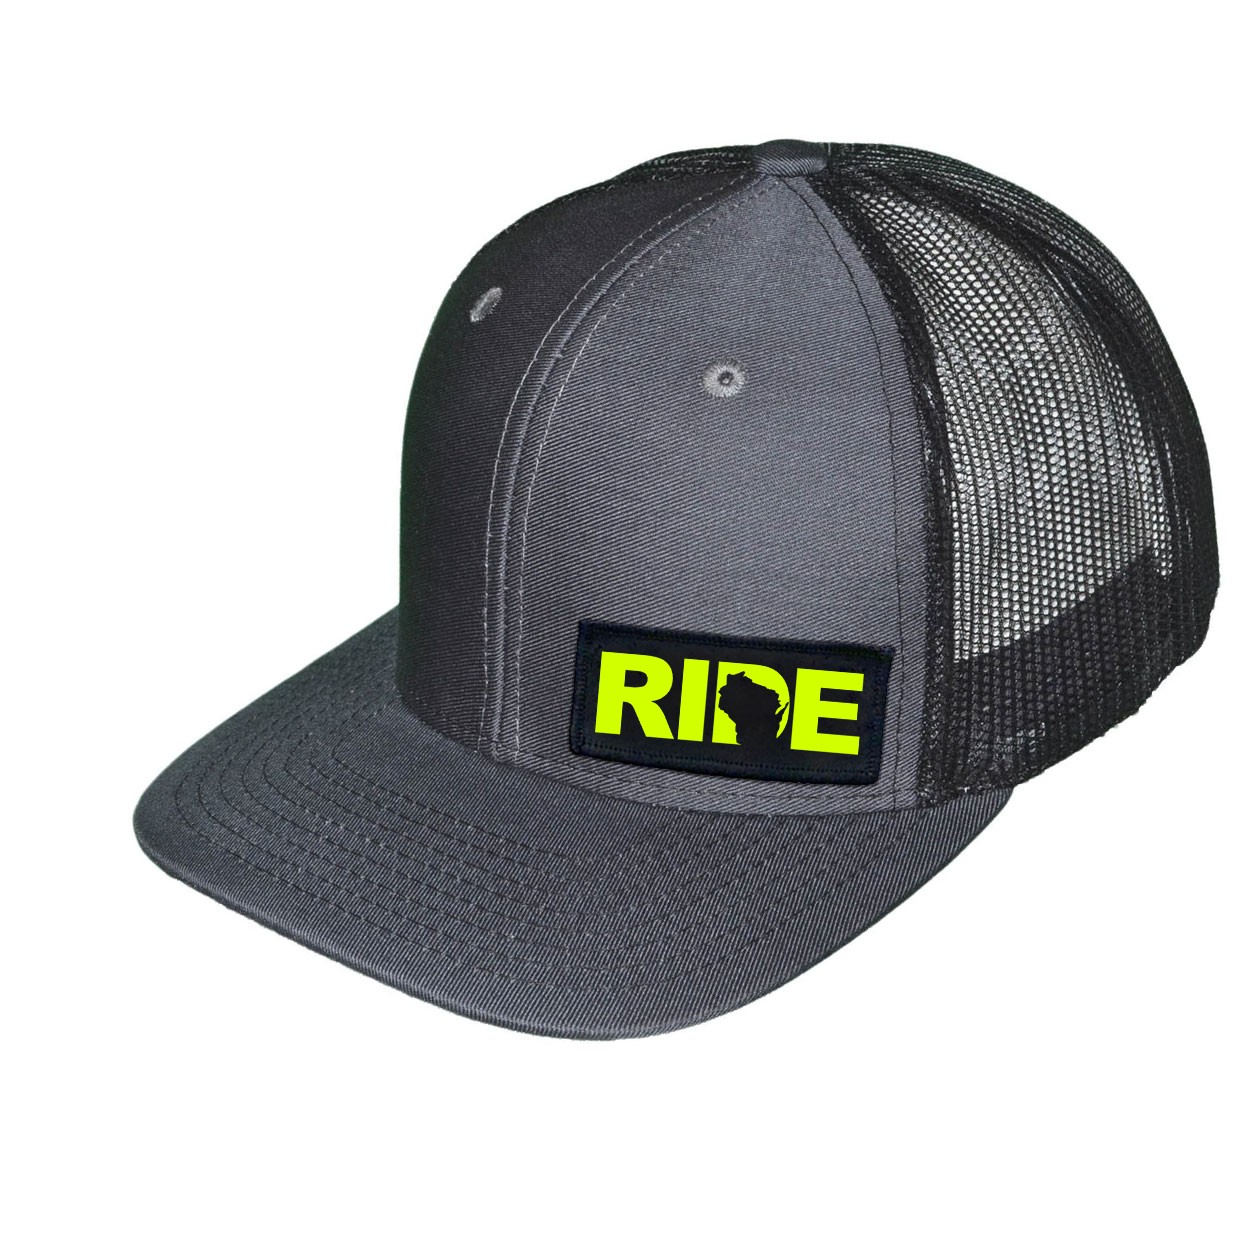 Ride Wisconsin Night Out Woven Patch Snapback Trucker Hat Gray/Black (Hi-Vis Logo)